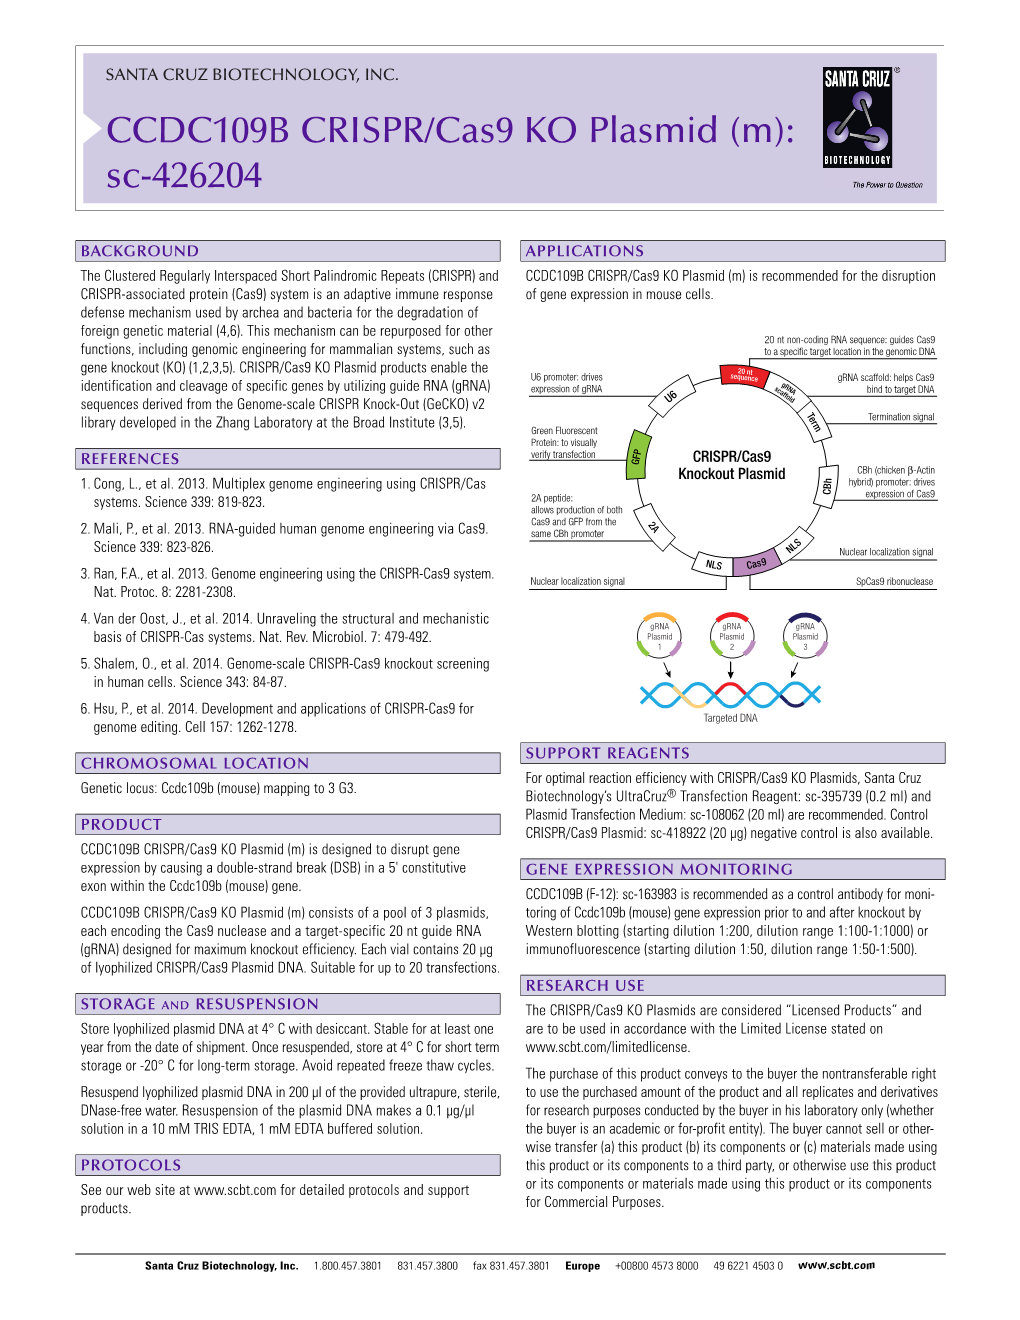 CCDC109B CRISPR/Cas9 KO Plasmid (M): Sc-426204